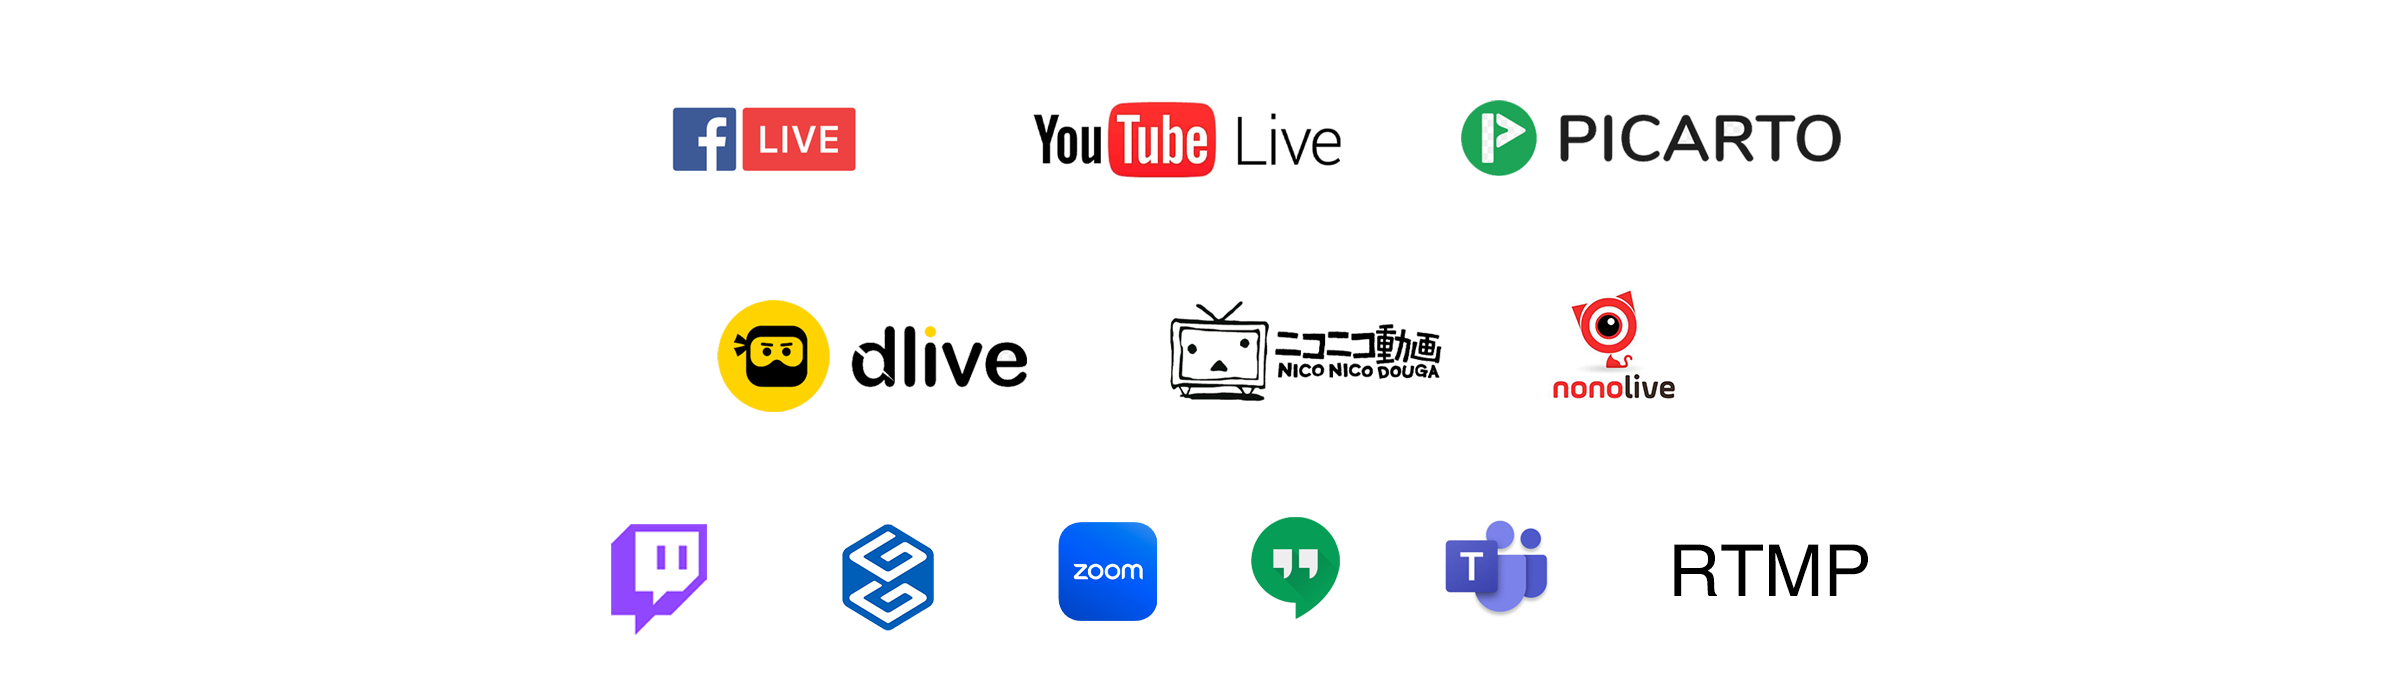 living_streaming_platform